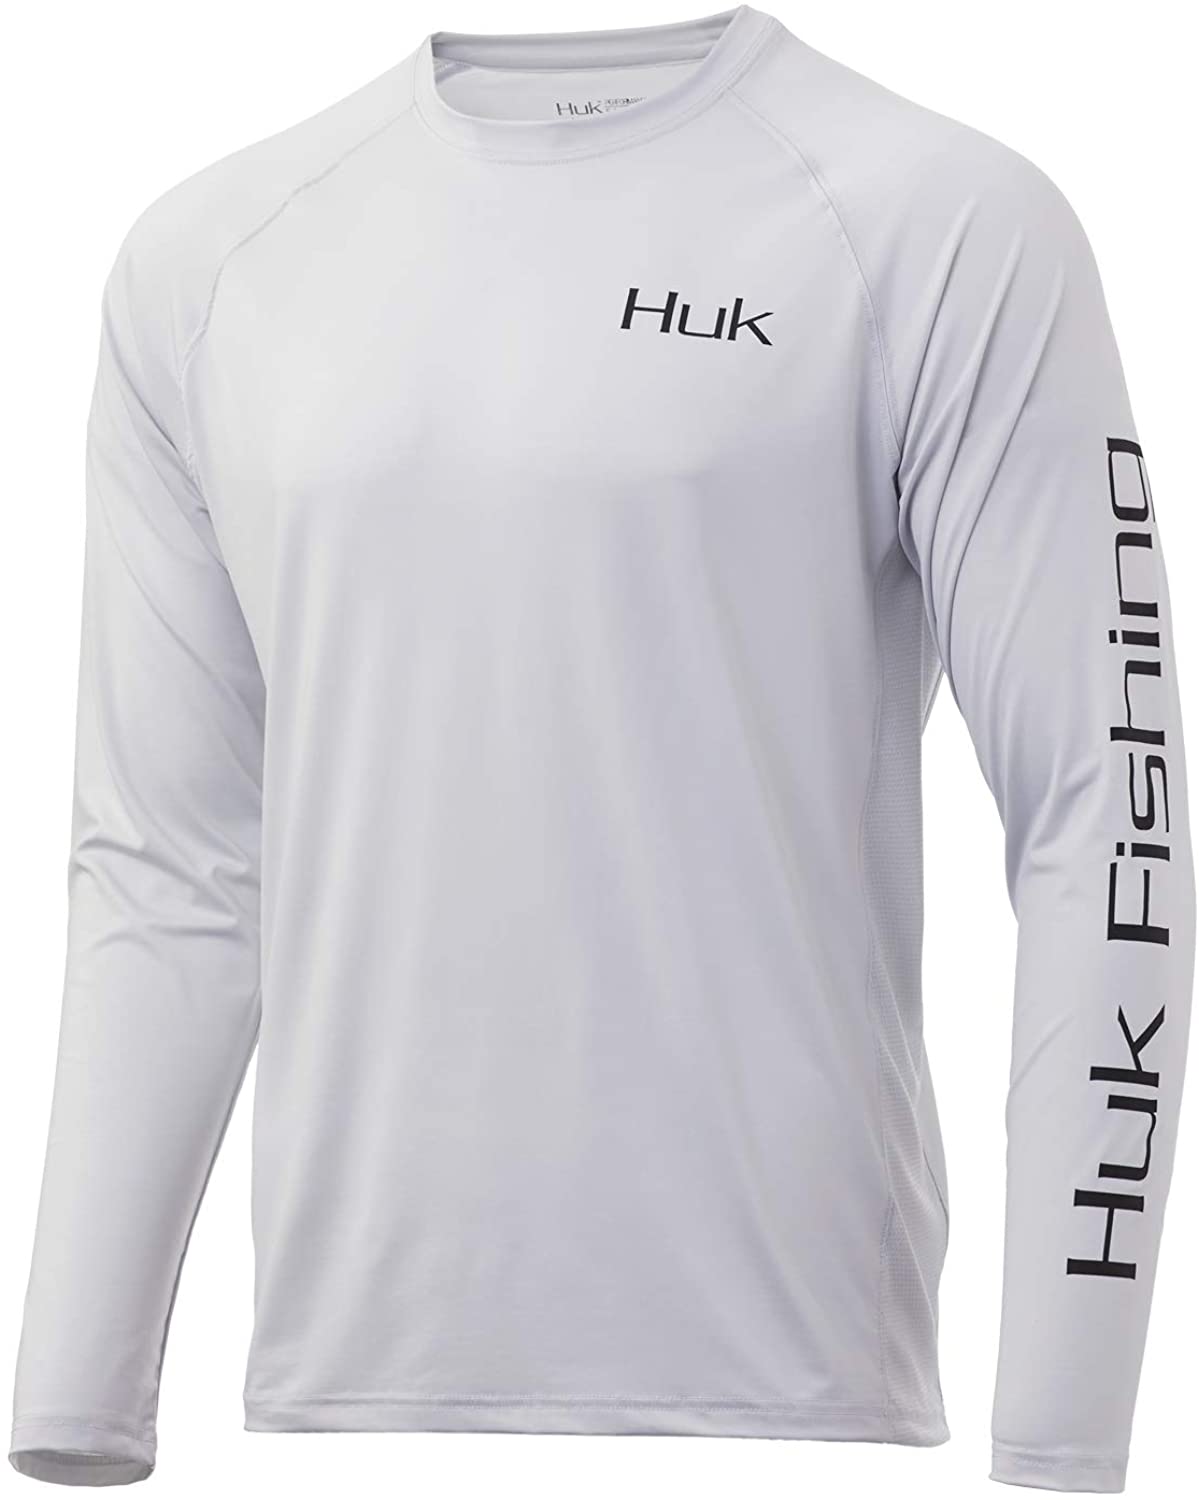 HUK Sun Protection Clothing Lightweight Fishing Shirt Fishing